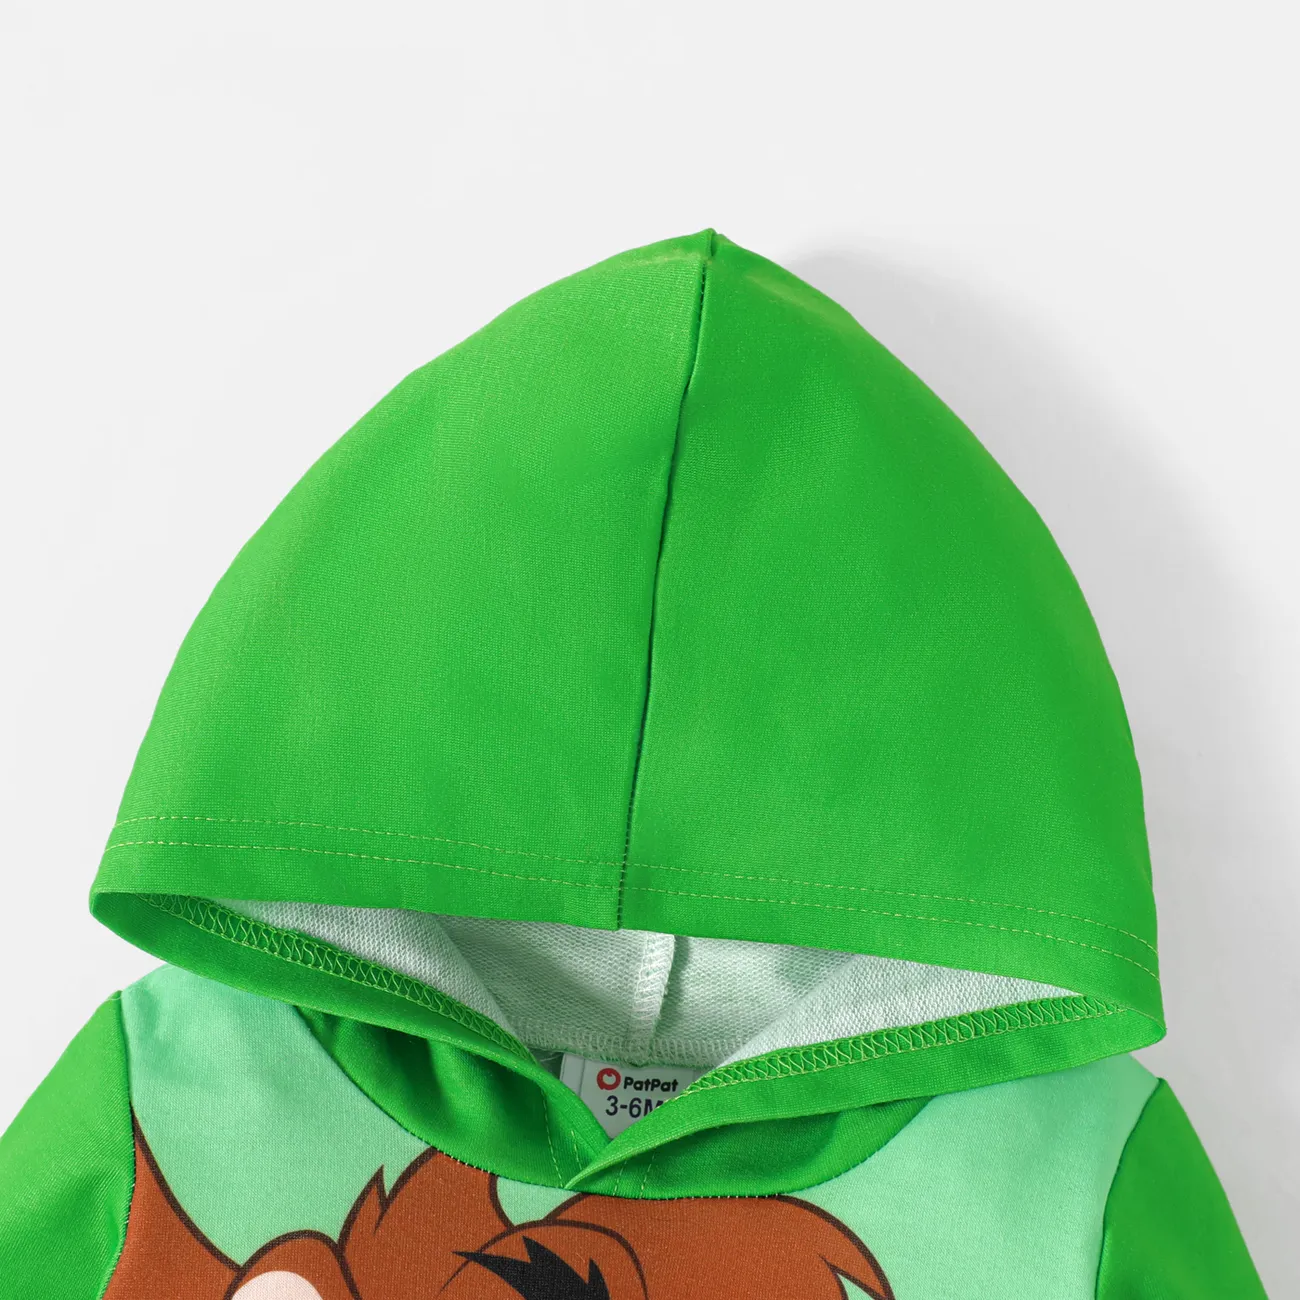 Looney Tunes Baby Boy/Girl Long-sleeve Graphic Hoodie and Sweatpants Set Green big image 1